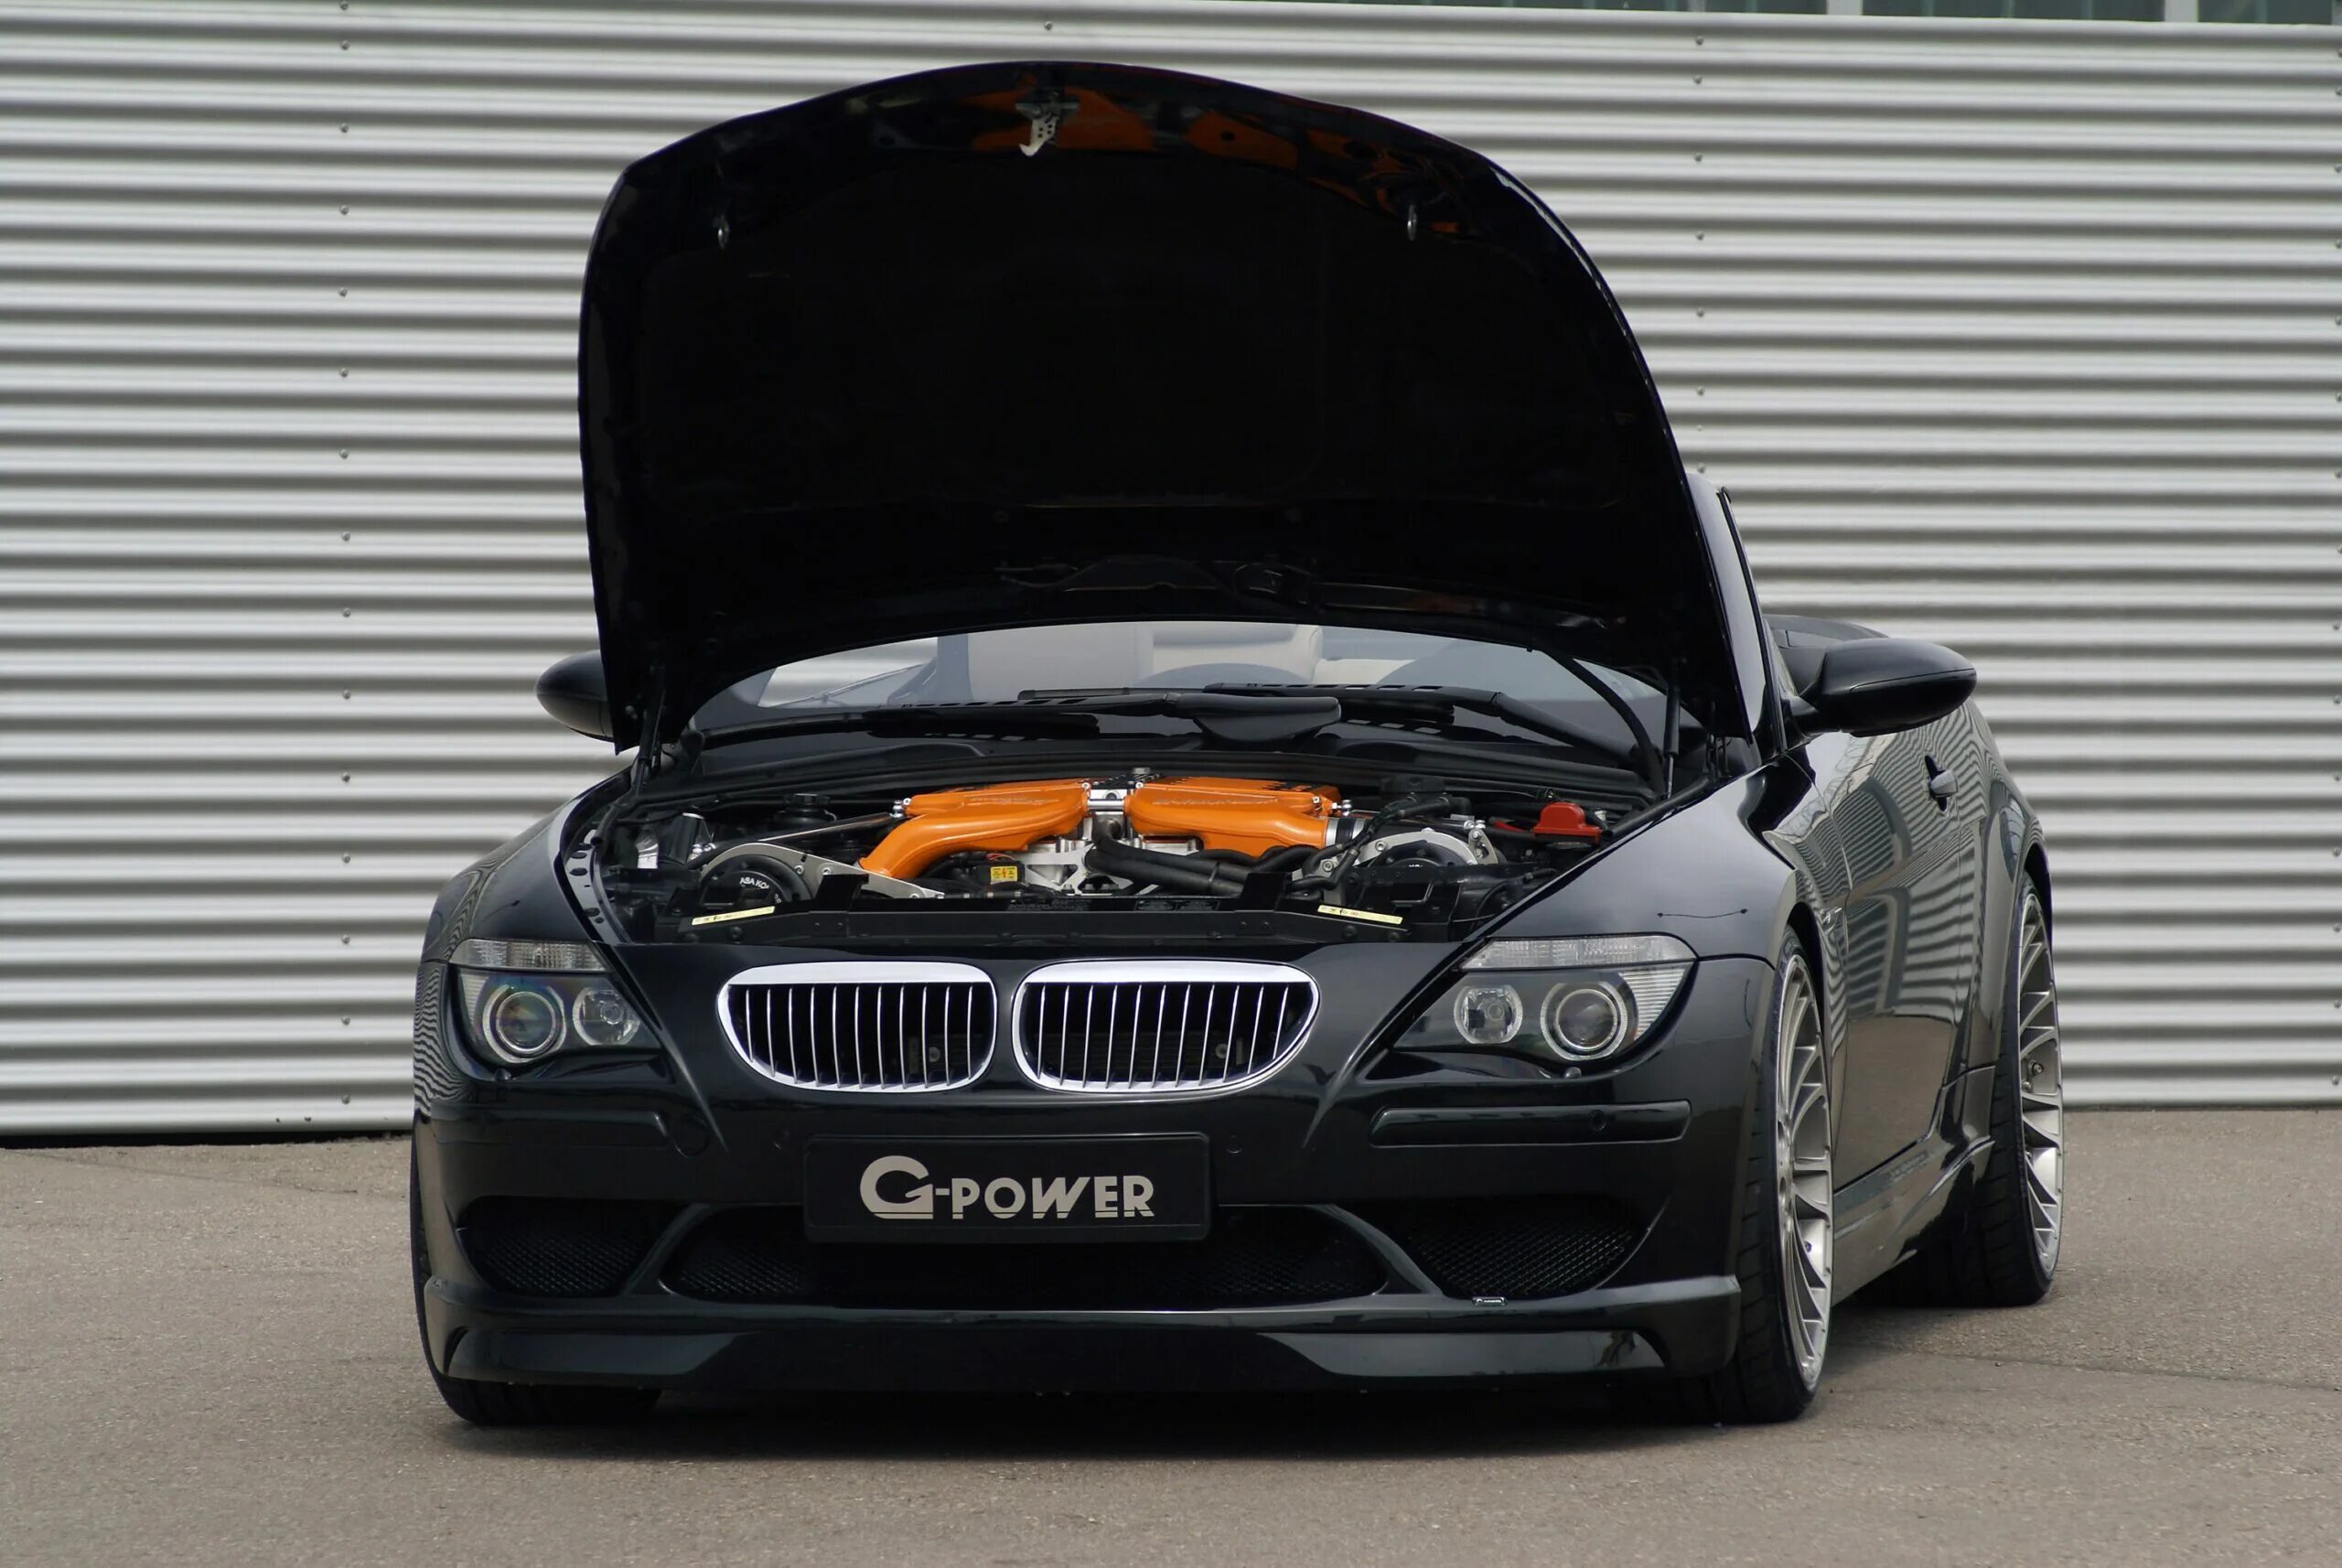 BMW e63 m6 g Power. Е63 БМВ G Power. 2010 BMW m6 g-Power Hurricane RR. BMW m6 v10 g Power. Power tuning